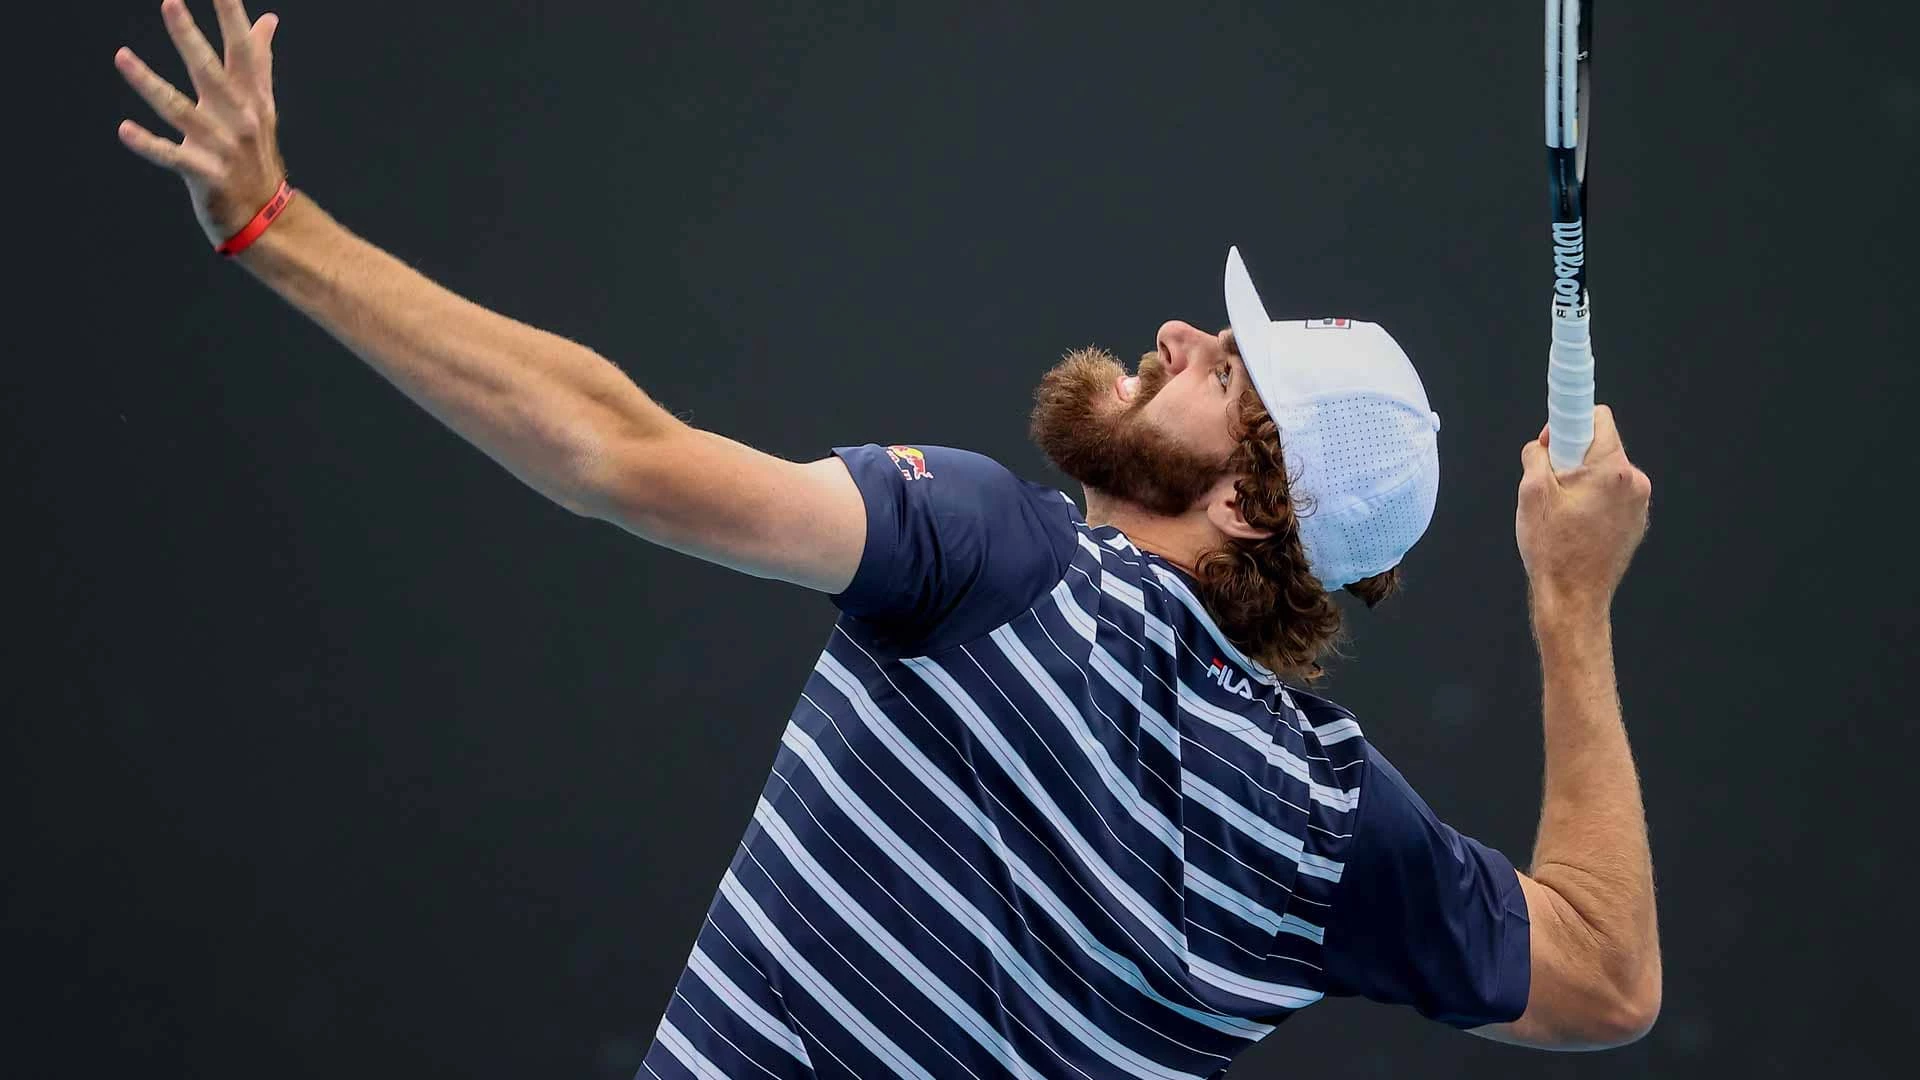 Доминик Кепфер - Райли Опелка. Прогноз на матч ATP Мадрид (3 мая 2021 года)